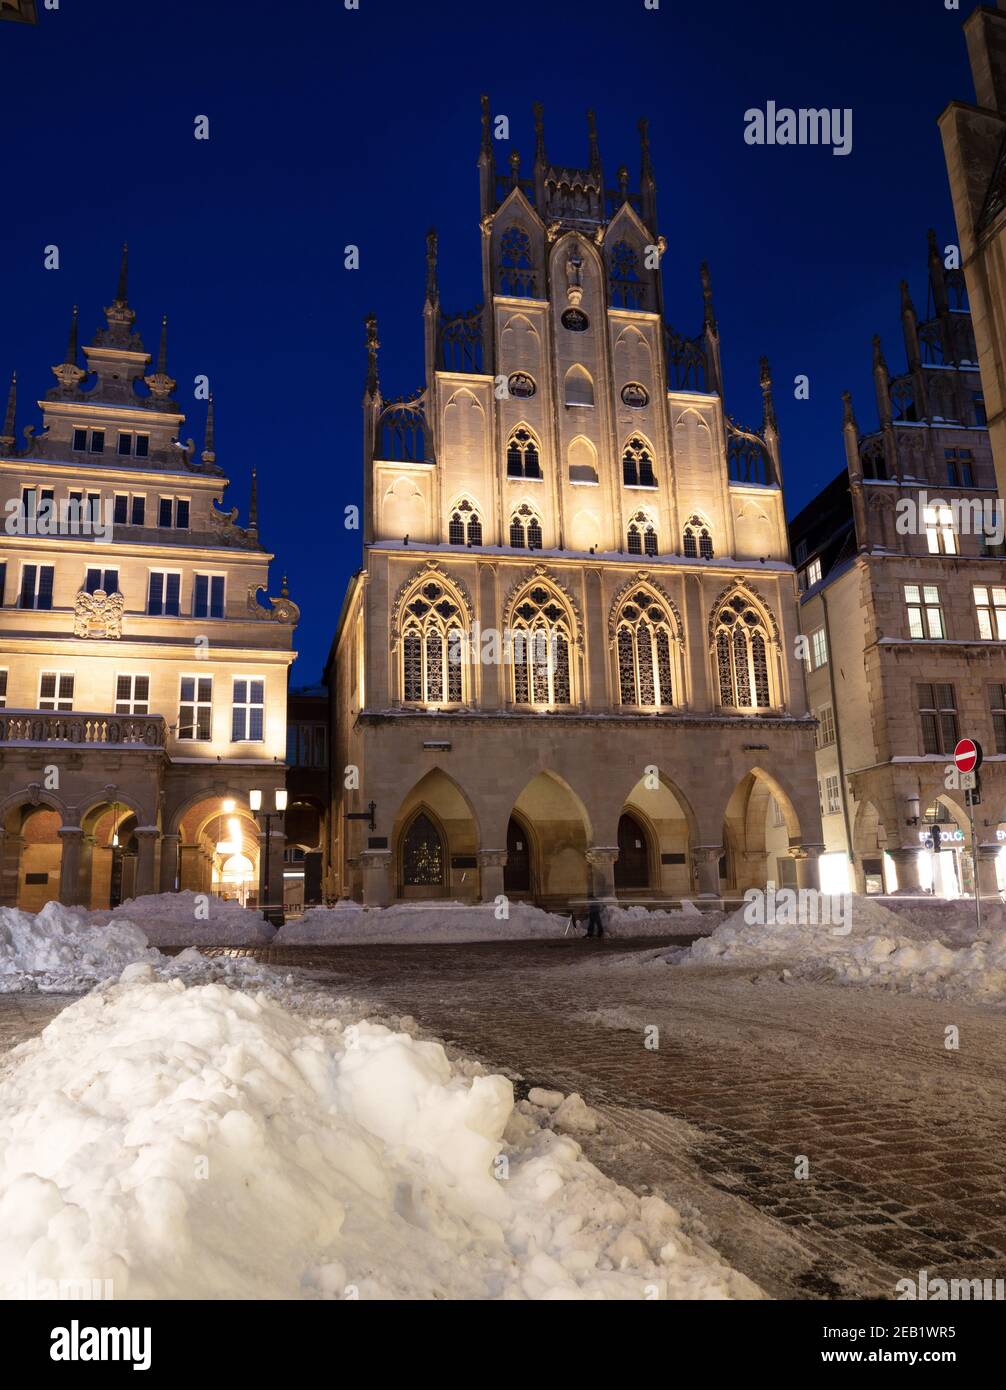 firo: 11.02.2021 City of Mvºnster, Westphalia, winter, snow Mvºnsterland, town hall, blue hour | usage worldwide Stock Photo